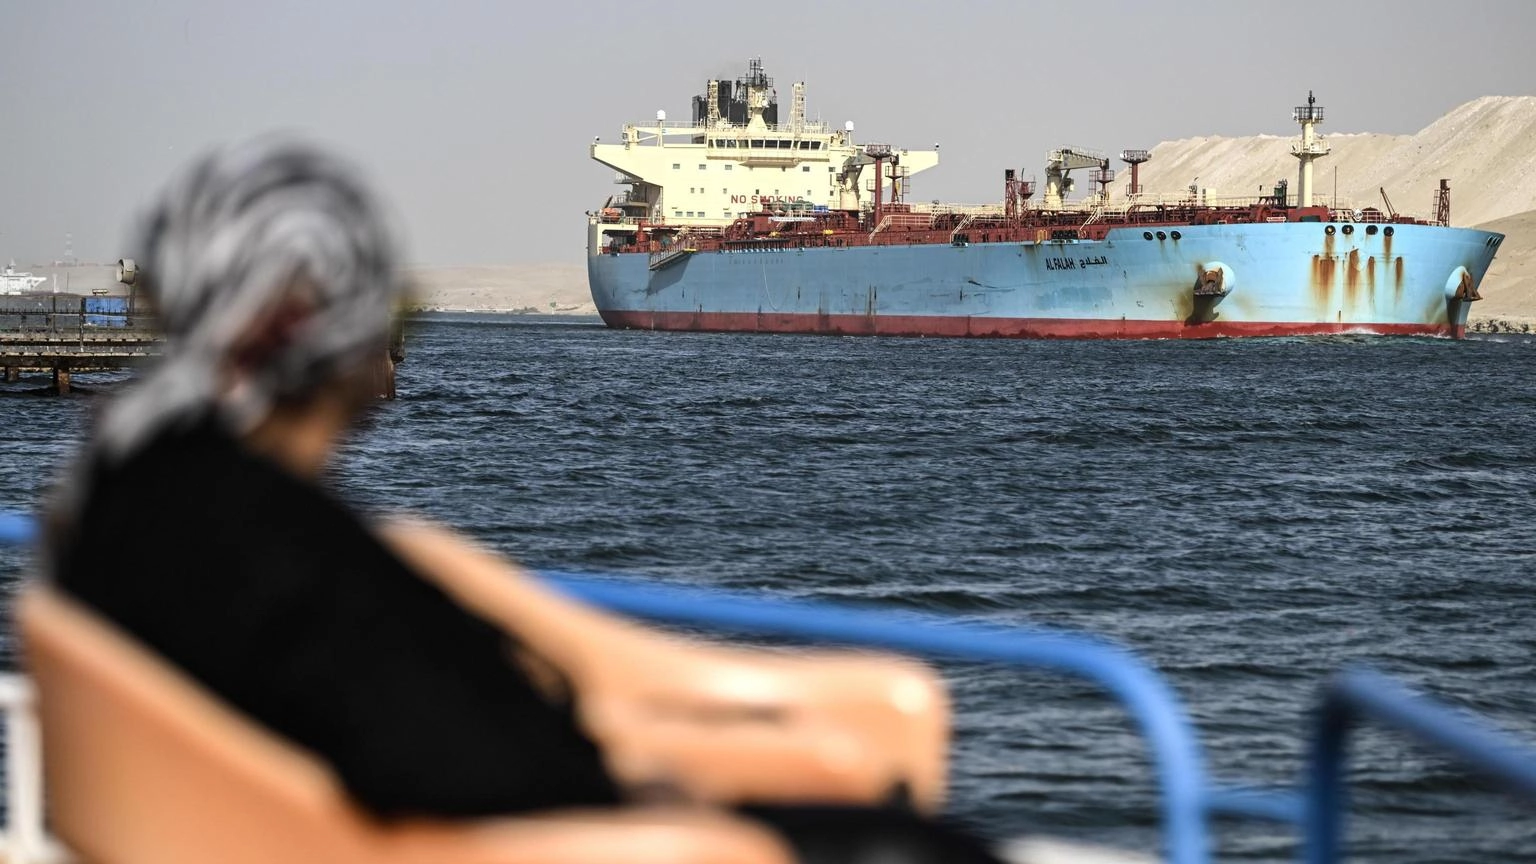 Lloydslist, 'traffico navale nel Mar Rosso giù del 20%'